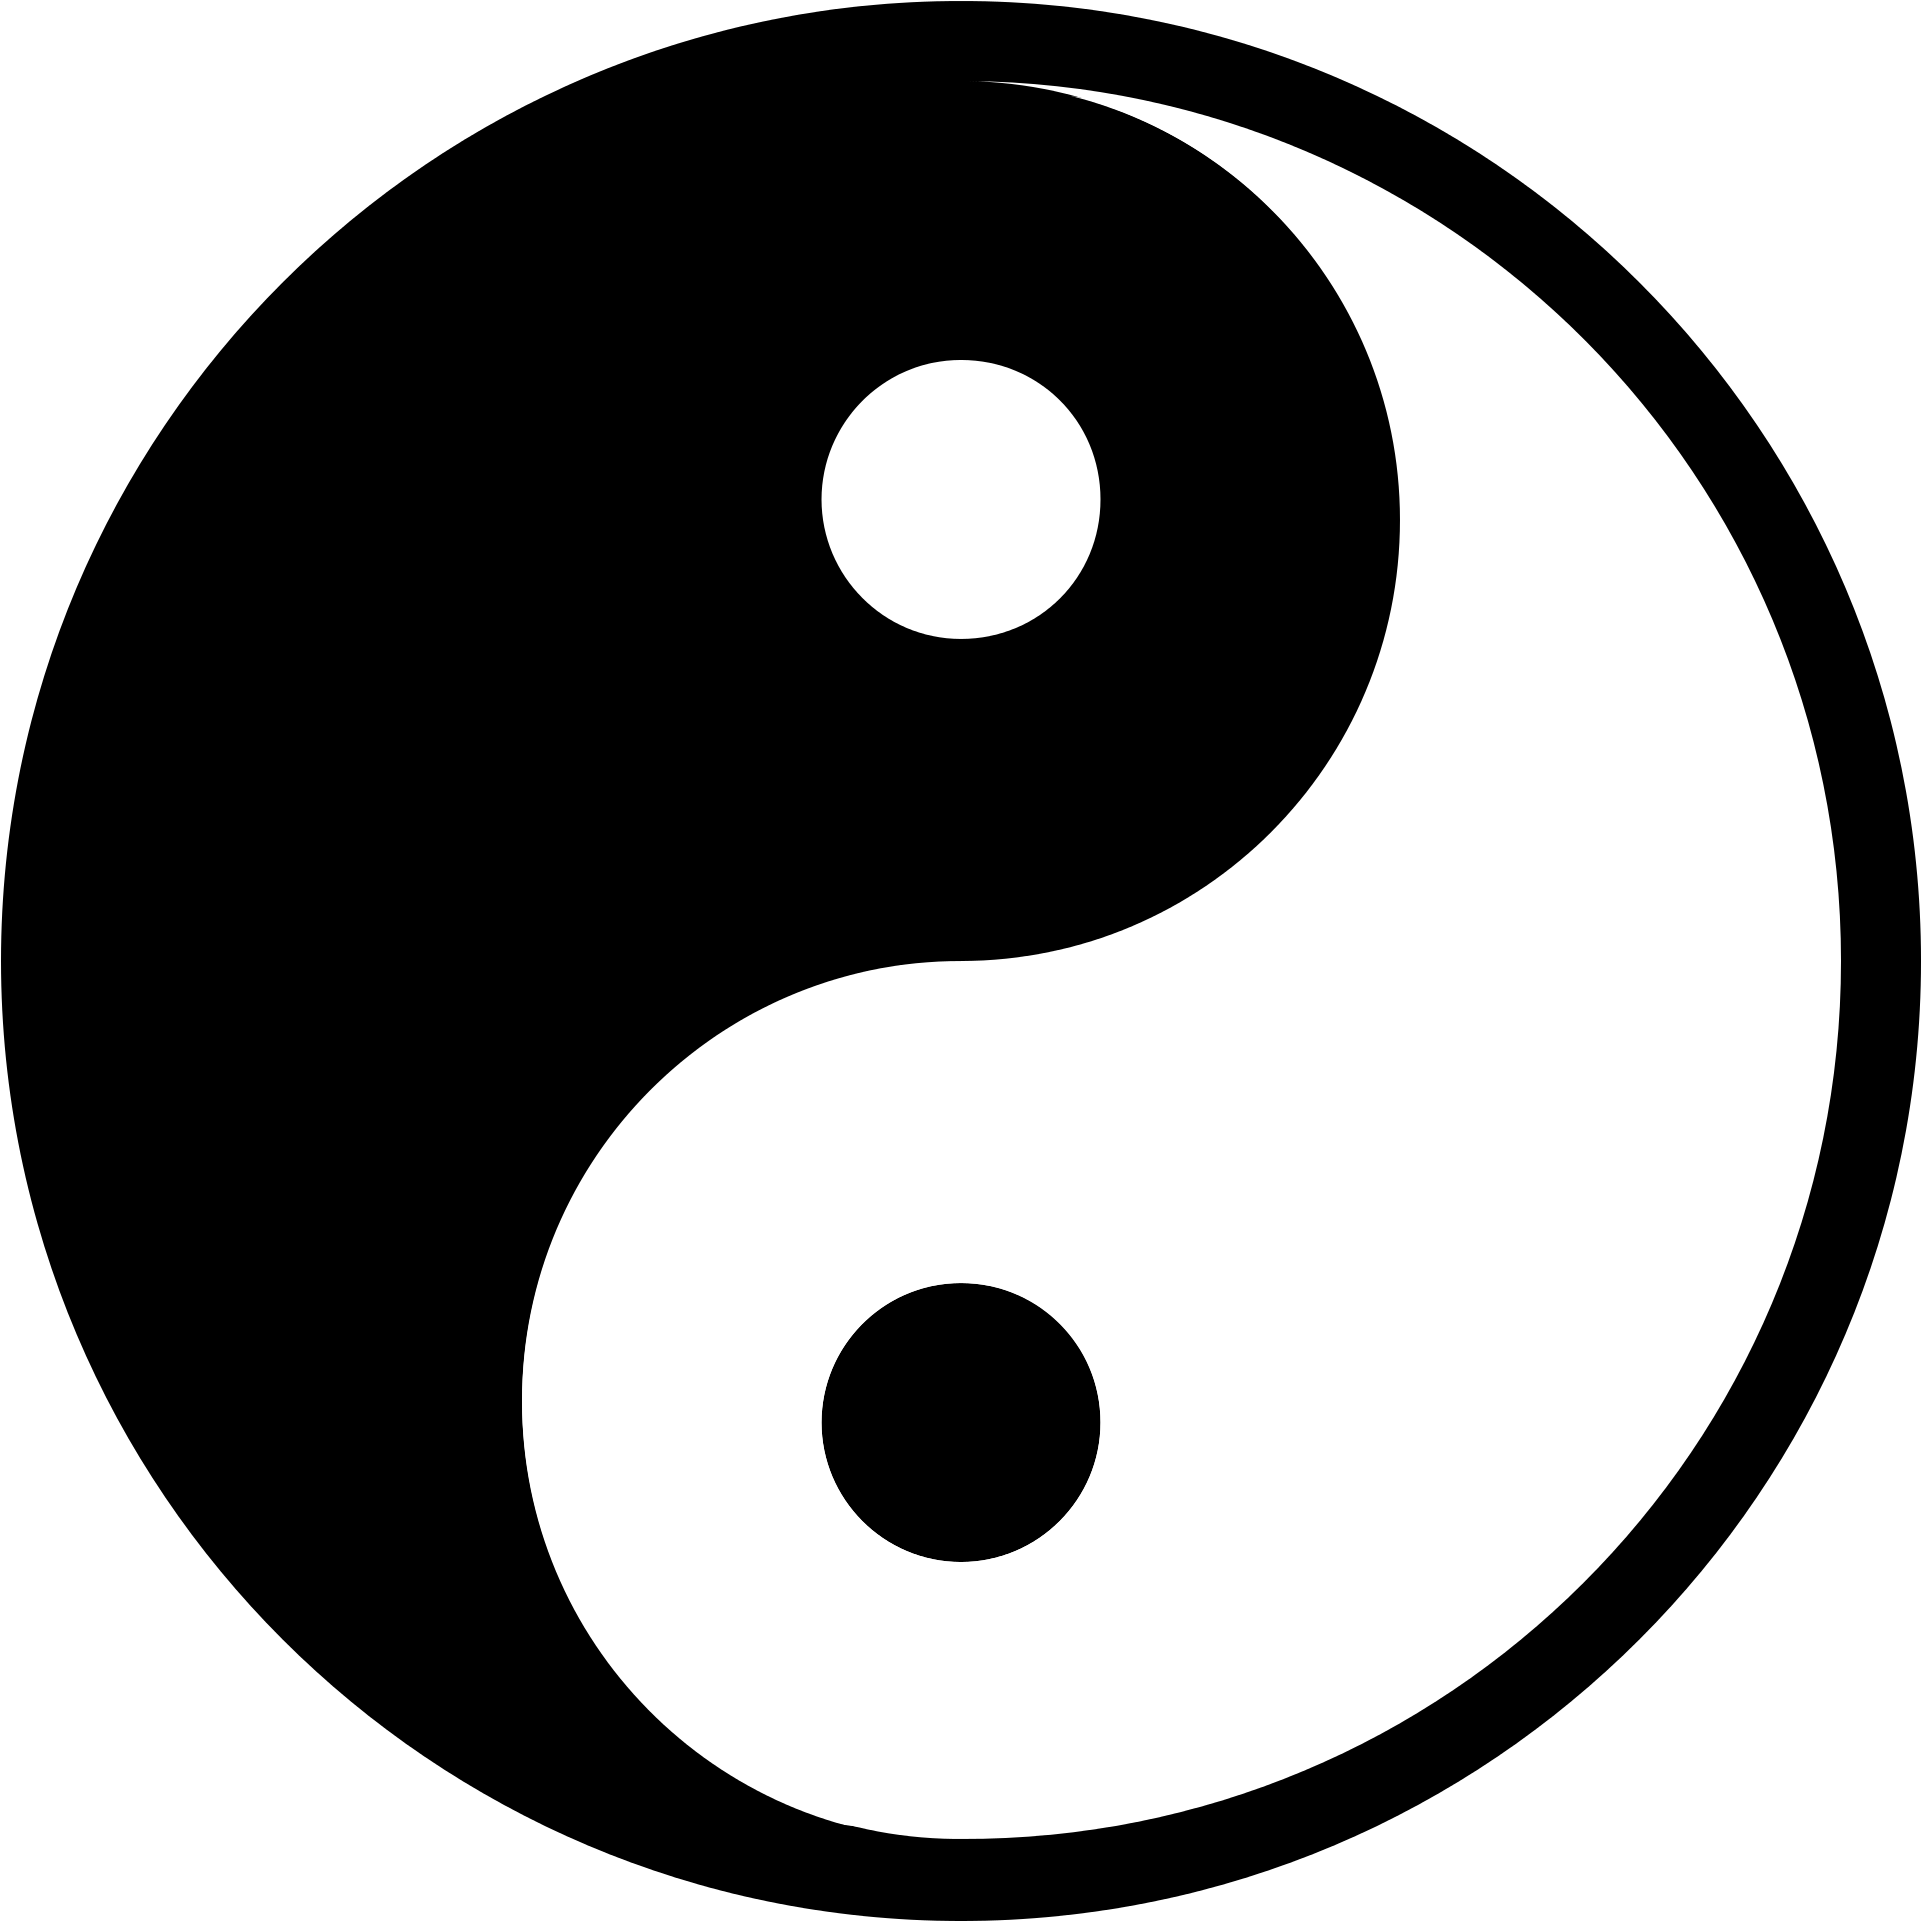 Free Yin Yang Transparent, Download Free Yin Yang Transparent png ...